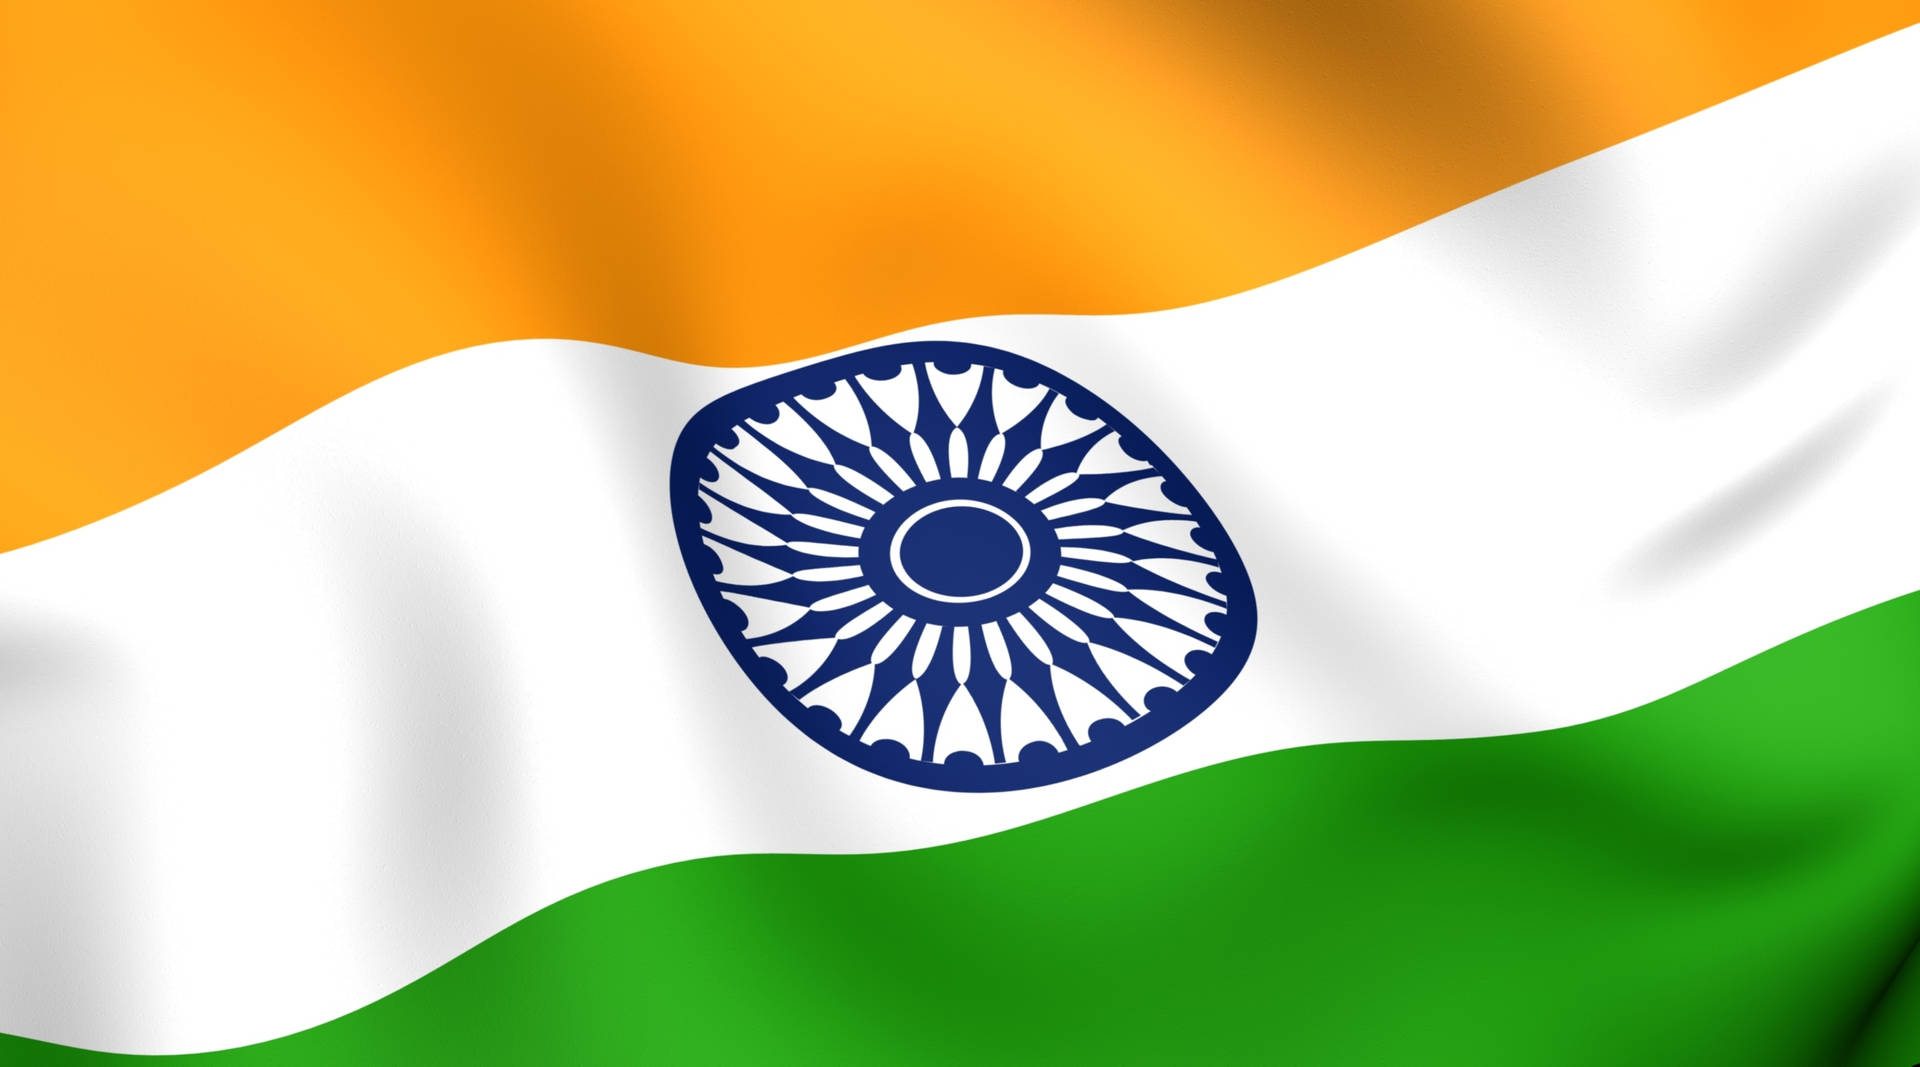 Wavy Indian Flag